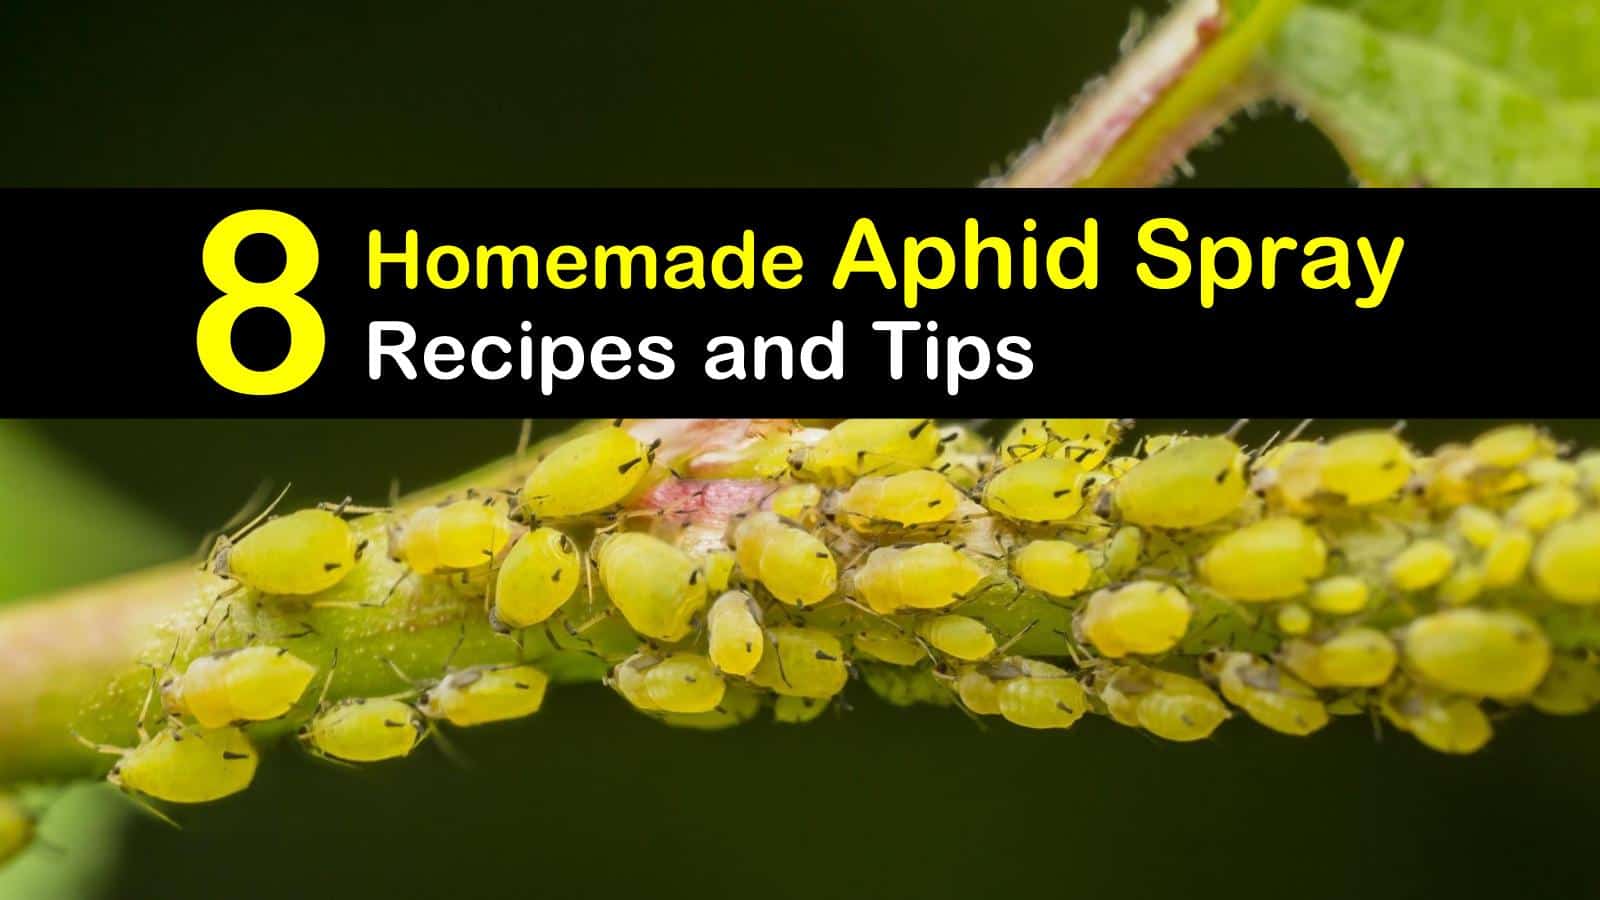 homemade aphid spray titleimg1